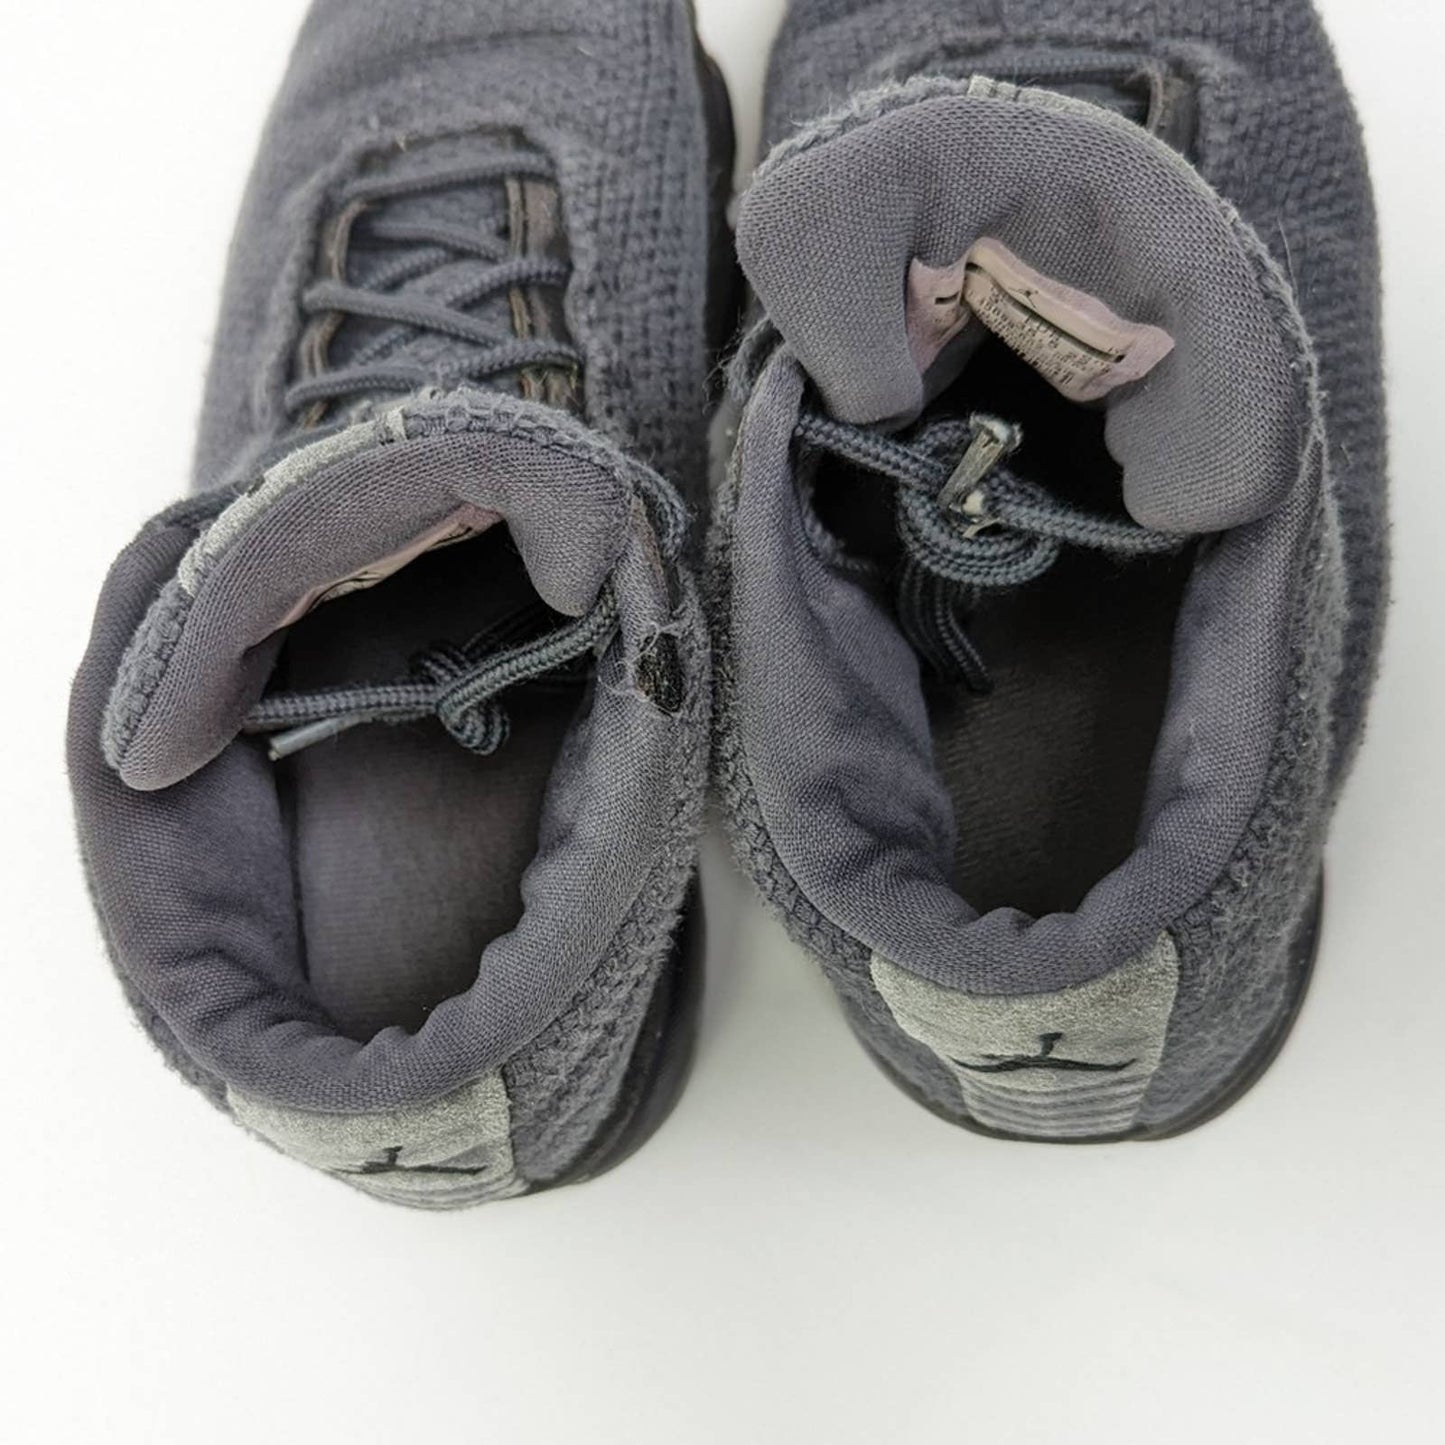 Jordan Horizon Low Basketball Shoes - Kids 3.5Y